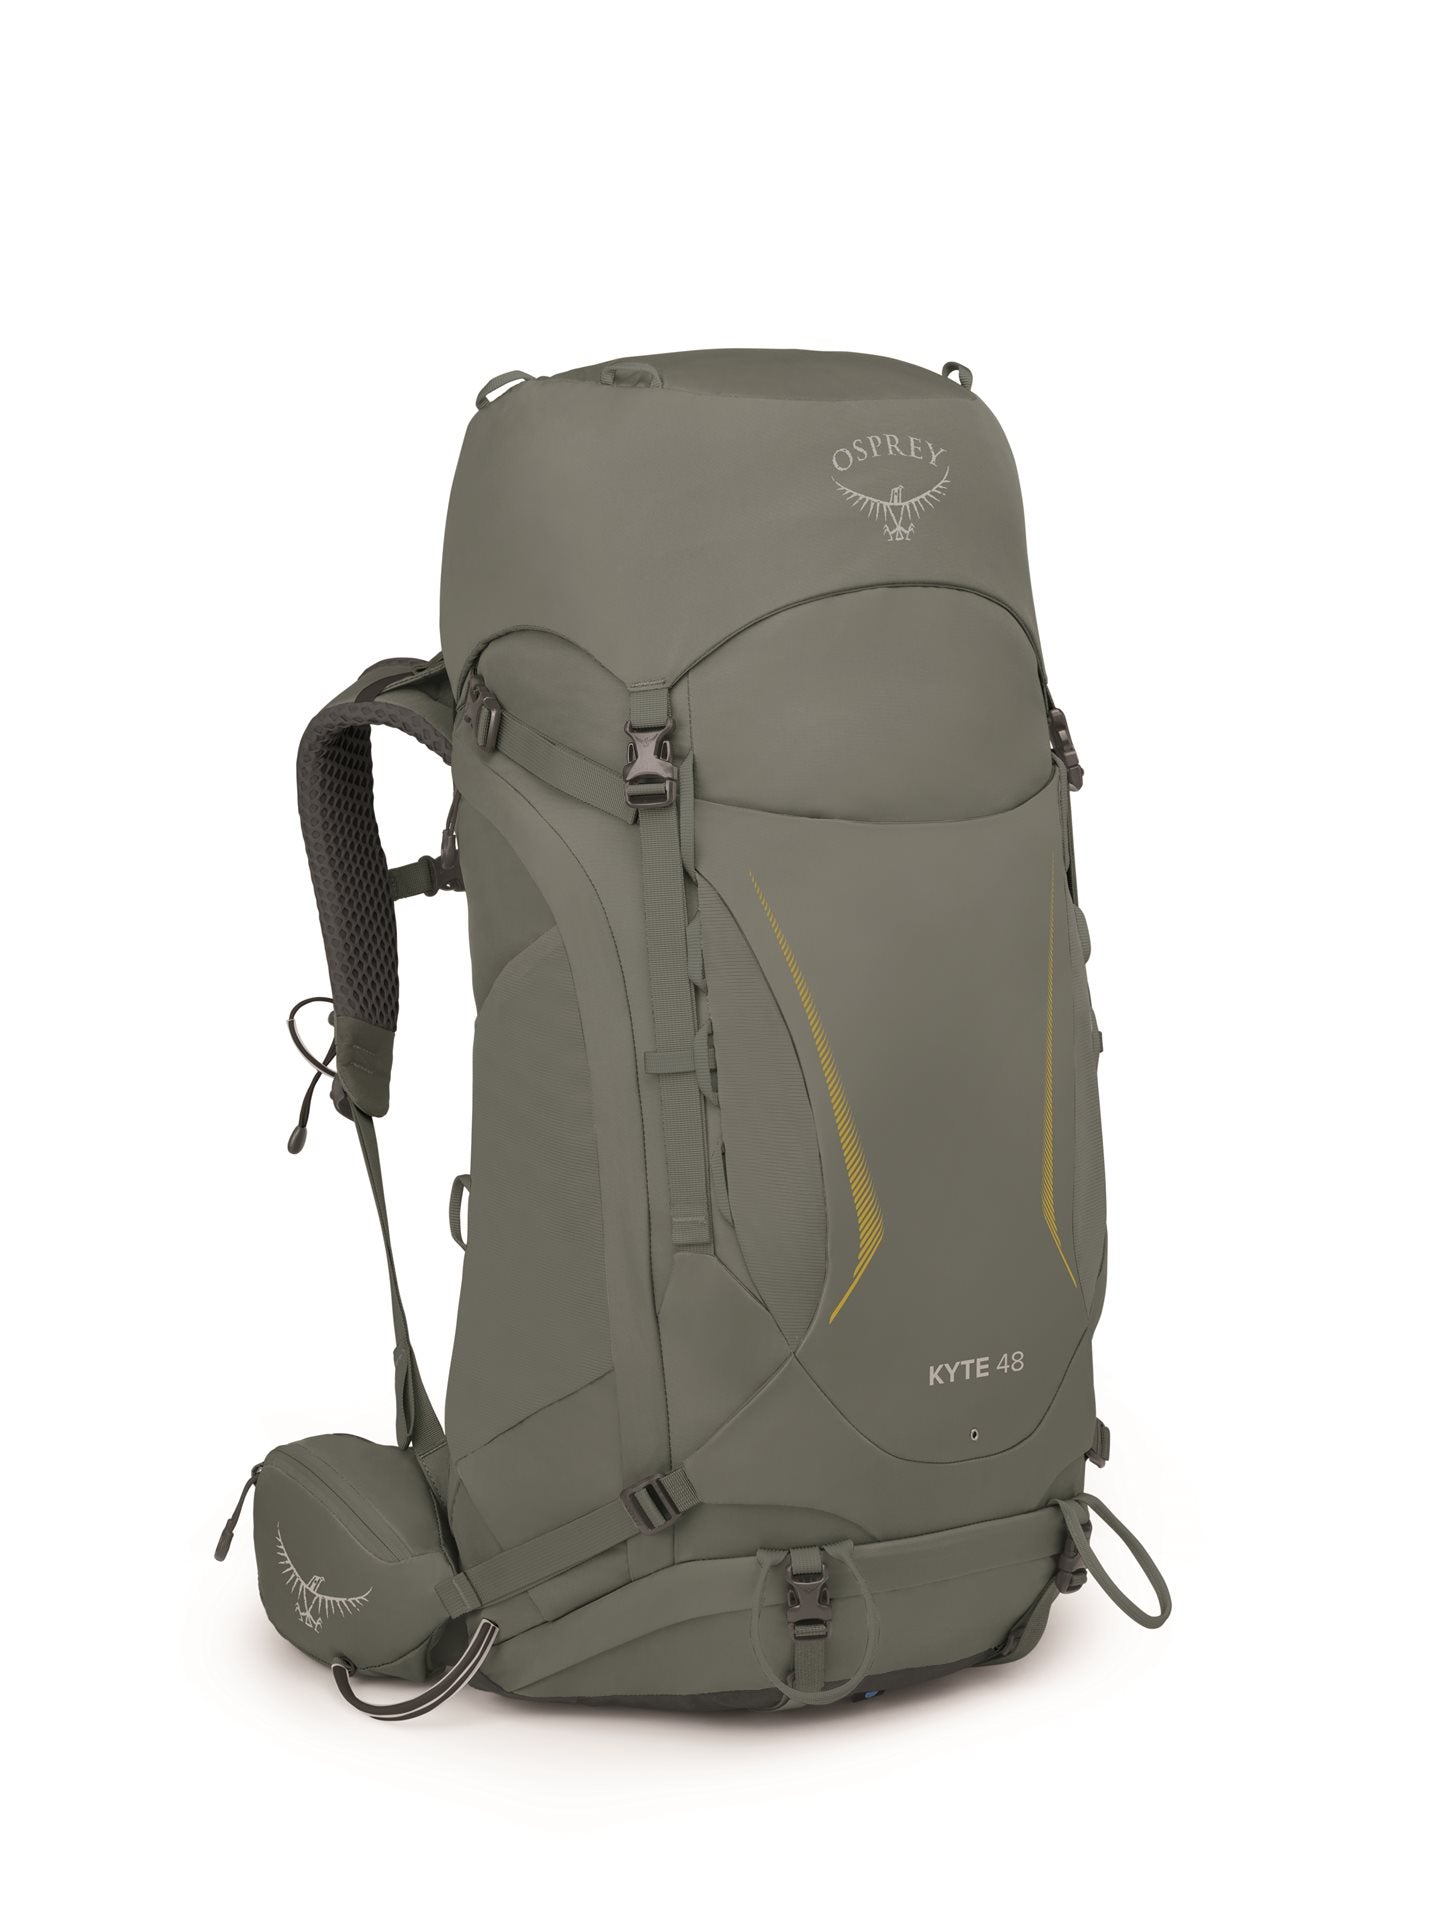 Osprey Kyte 48 Rocky Brook Green WXS/S Backpack - Reisartikelen-nl